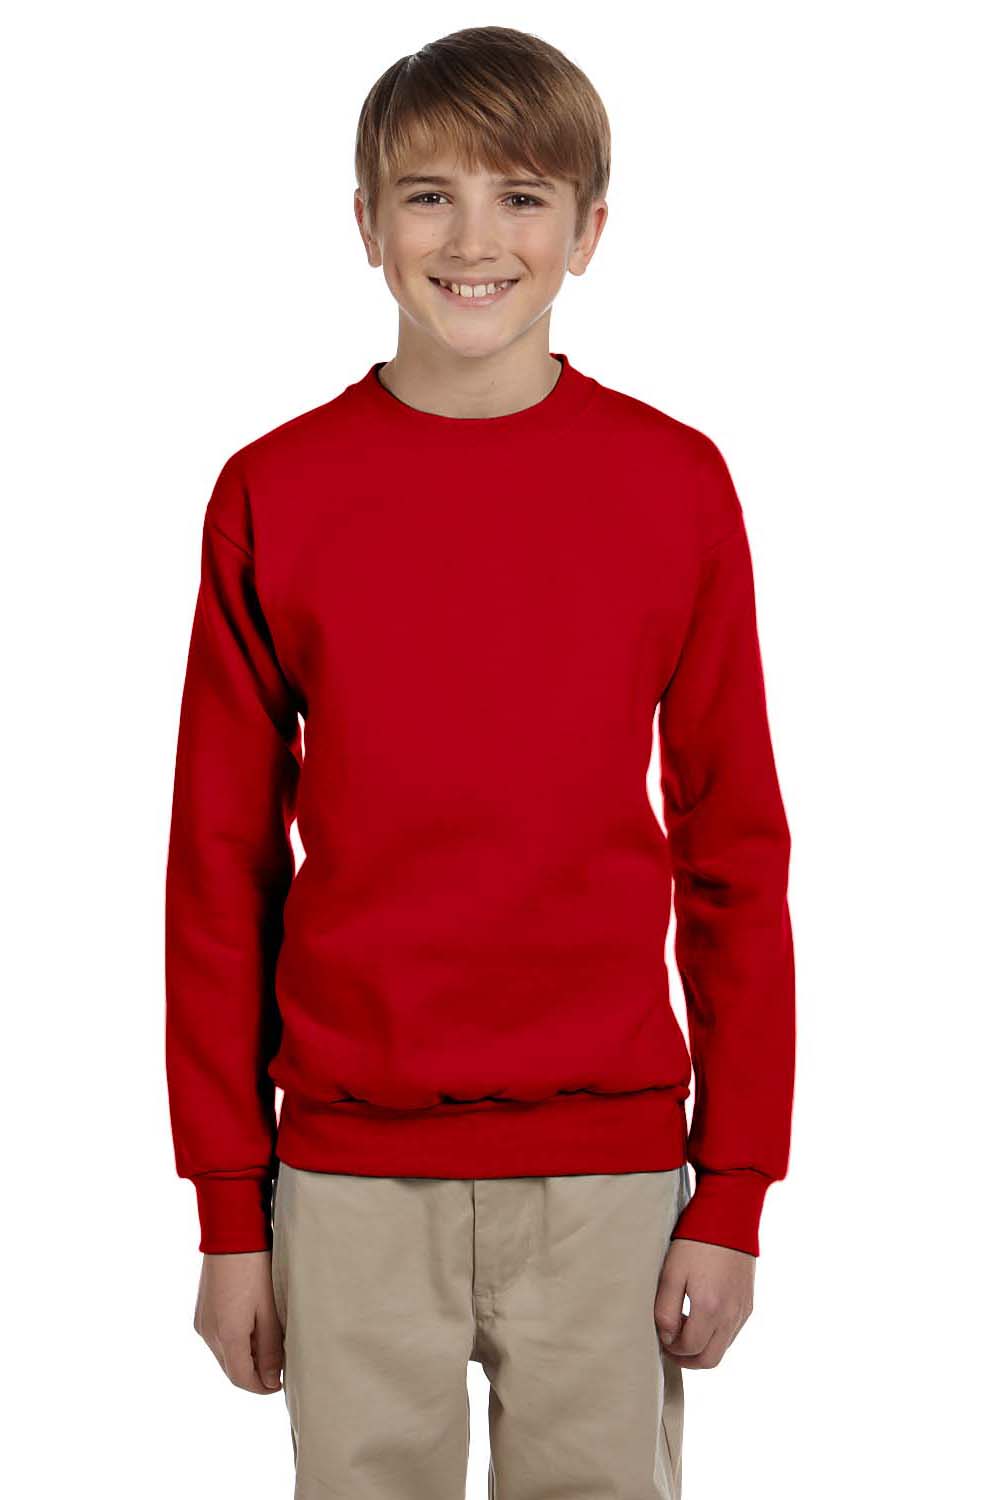 Hanes P360 Youth EcoSmart Print Pro XP Fleece Crewneck Sweatshirt Red Front